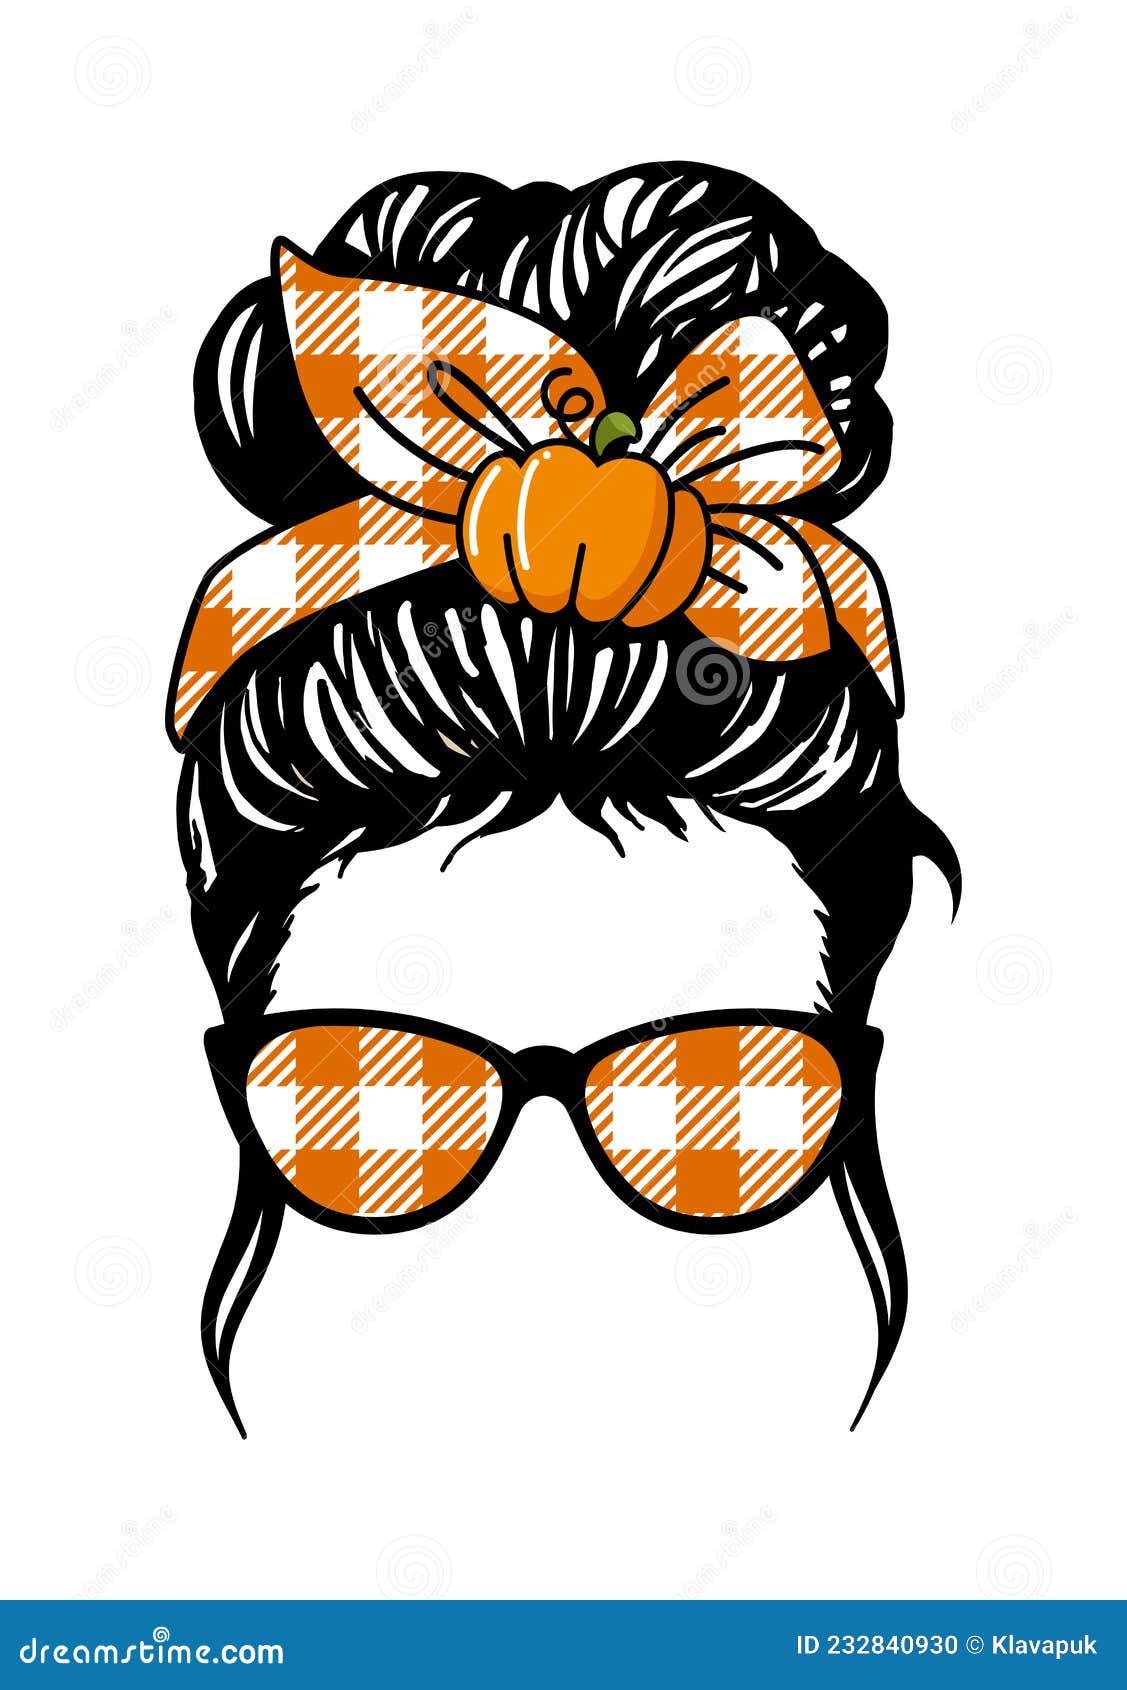 autumn messy bun with pumpkin , girl with messy bun and glasses, buffalo plaid bandana